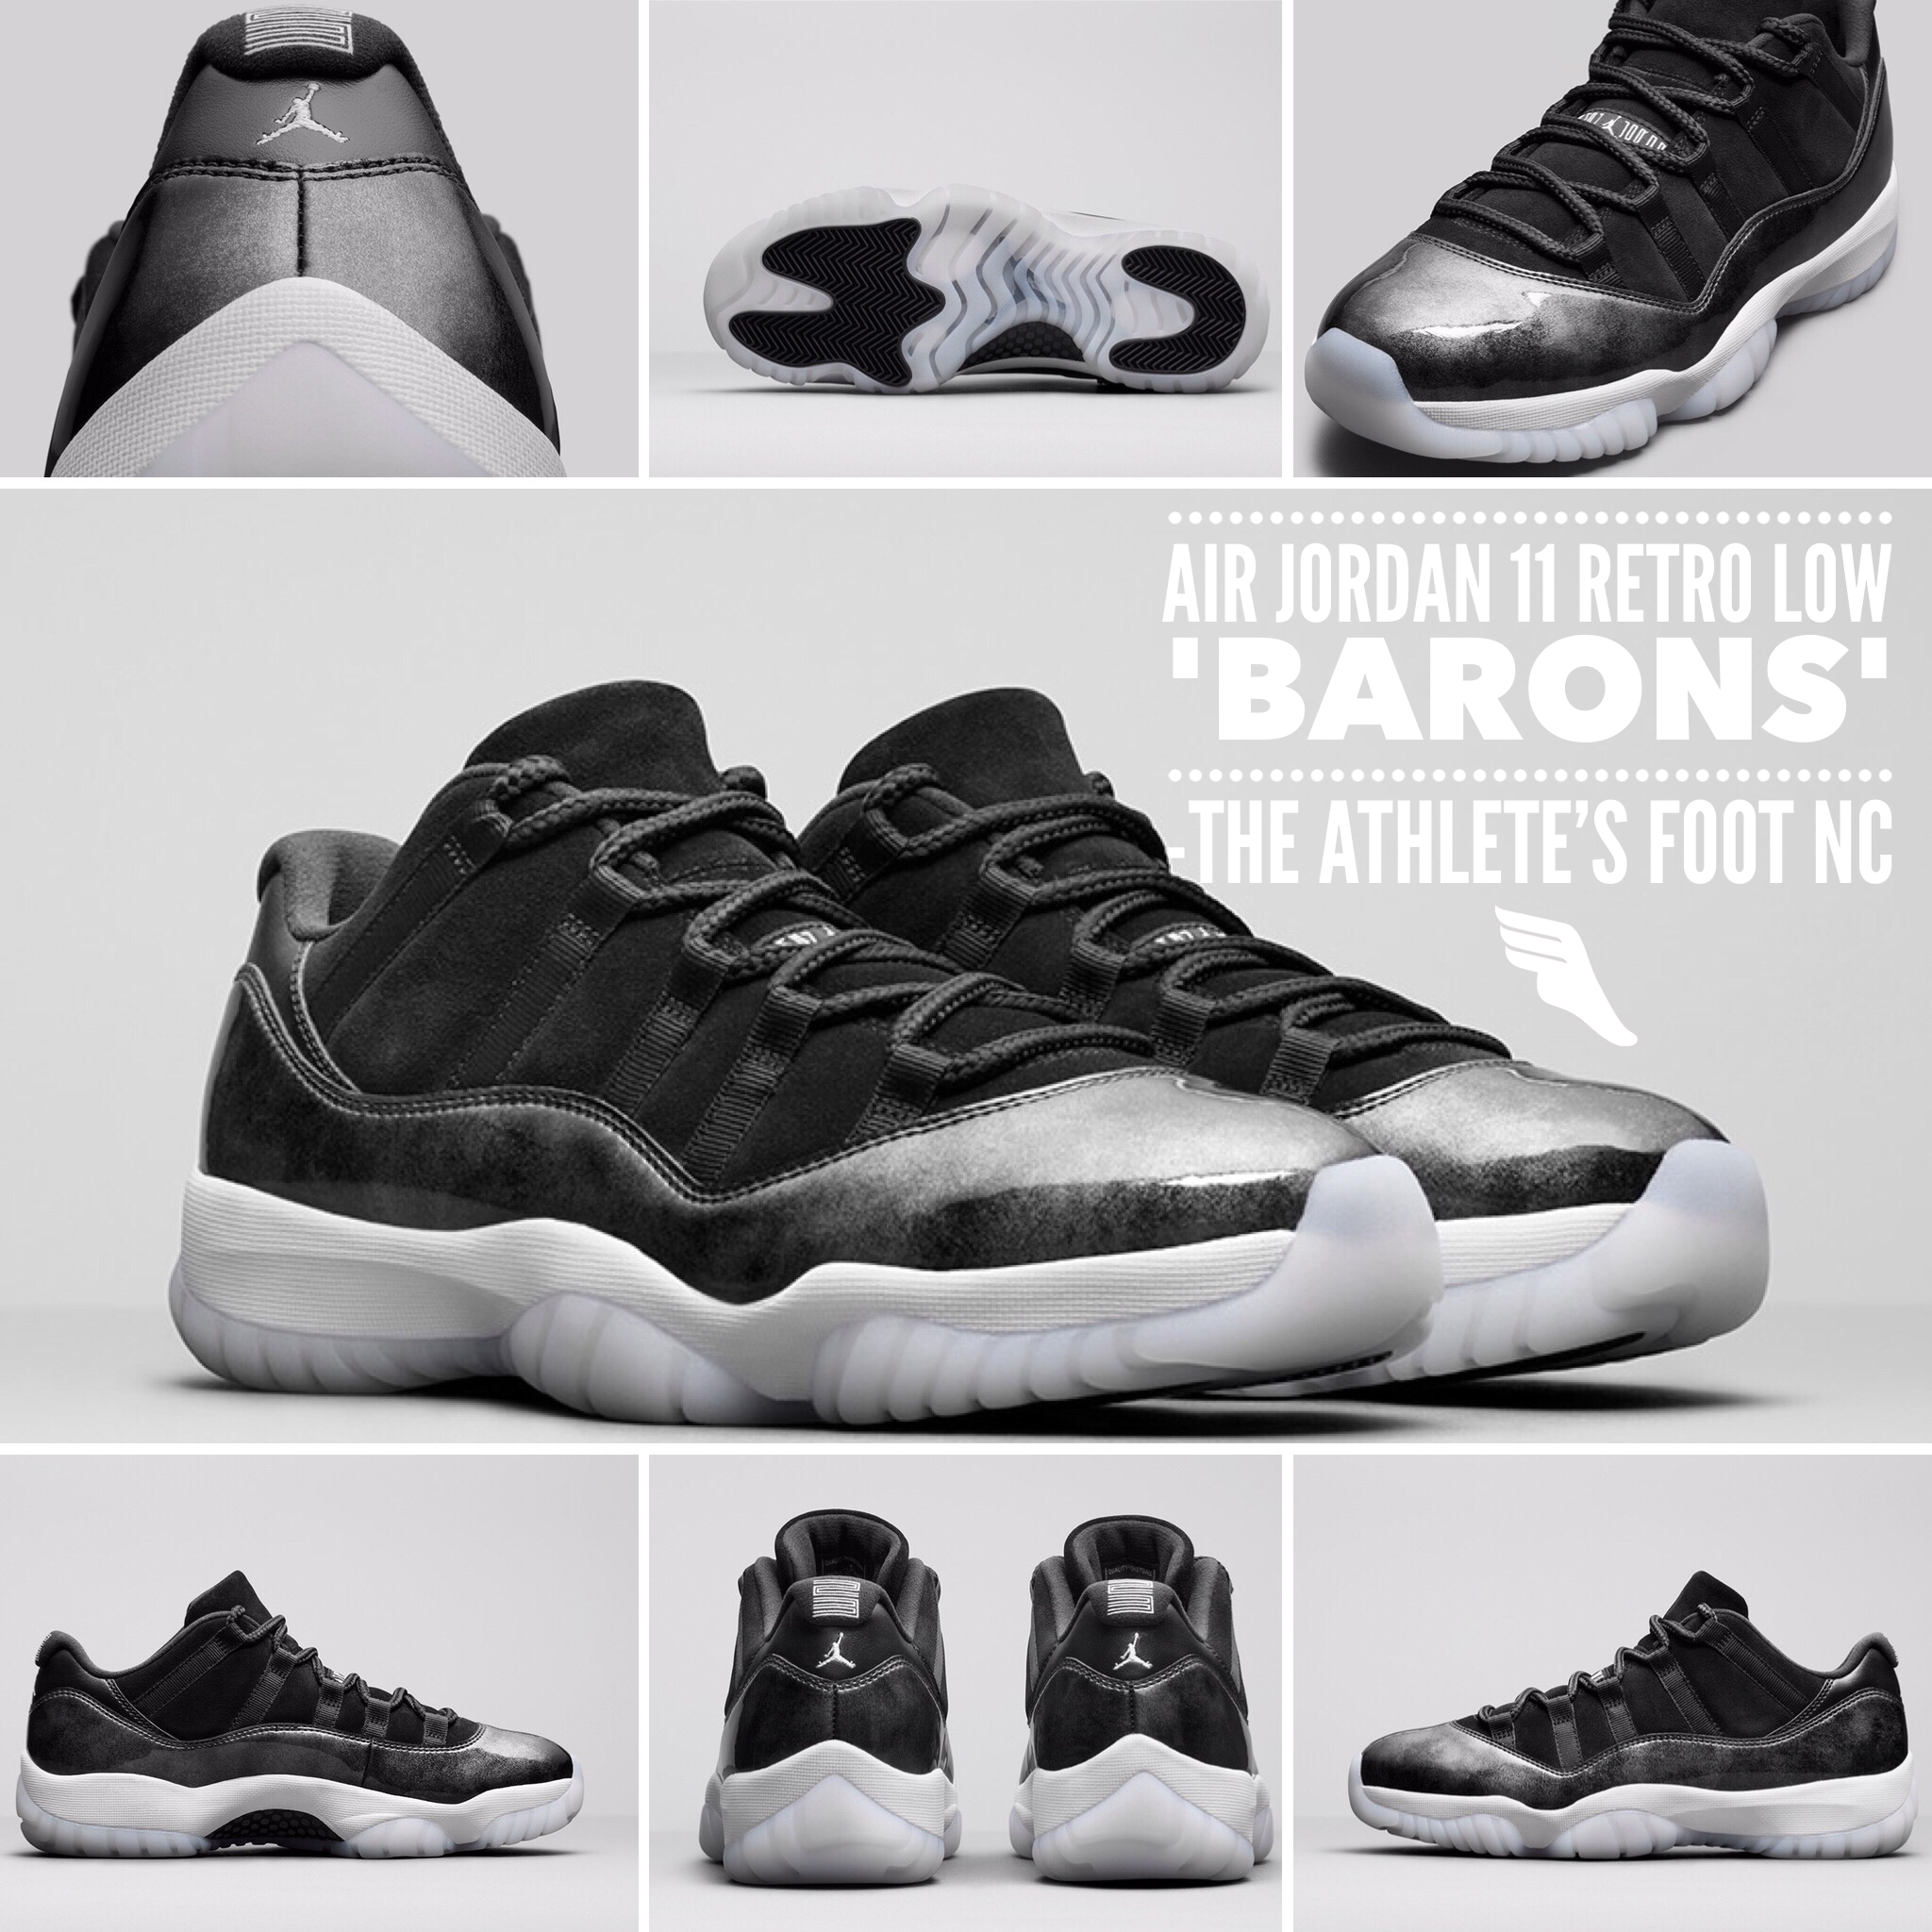 jordan 11 barons on feet